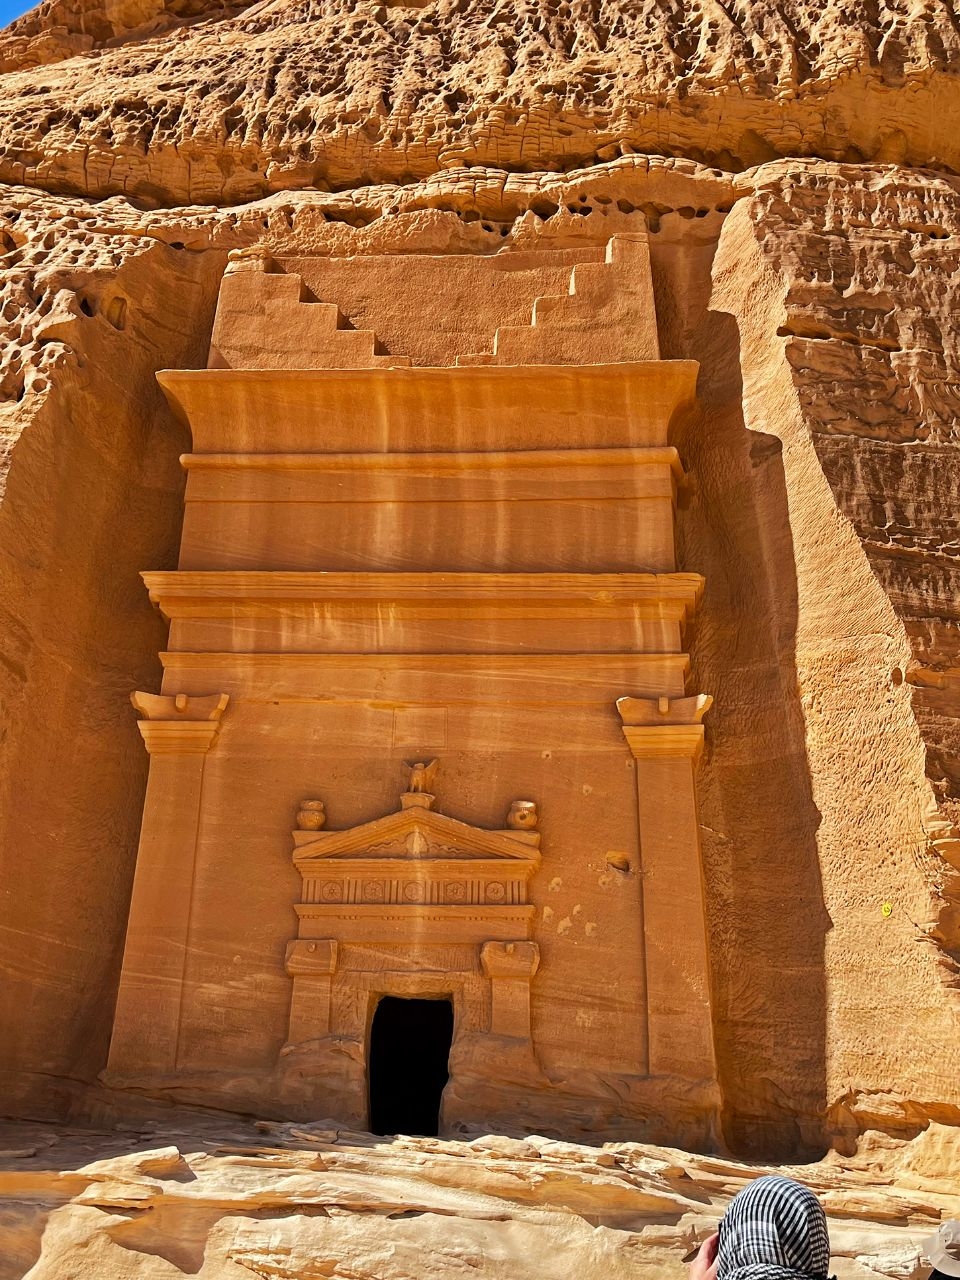 Jabal Al Banat, Hegra Archaeological Site (UNESCO # 1293)